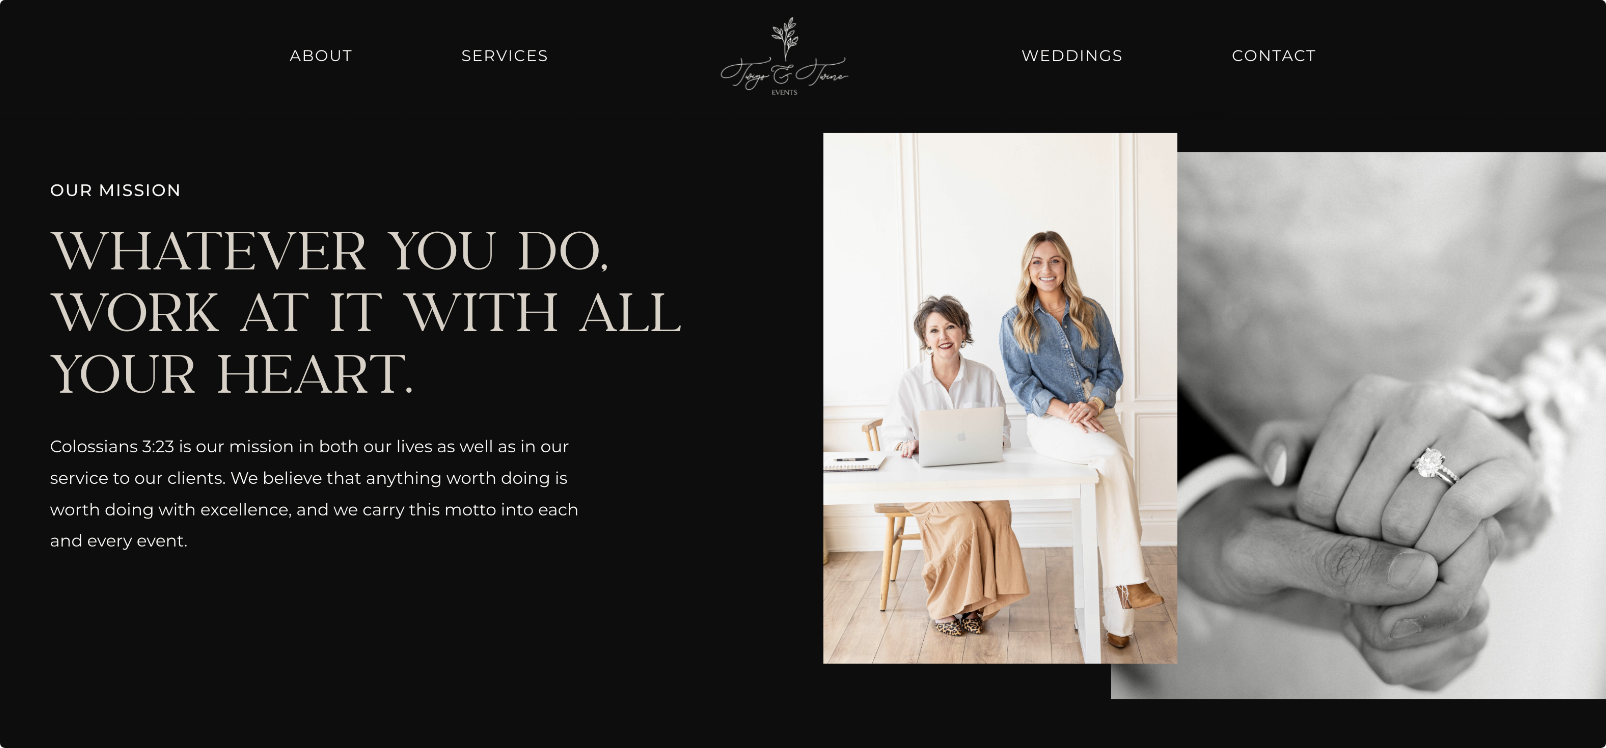 Twigs & Twine Events website design, minimal classy branding, wedding planning